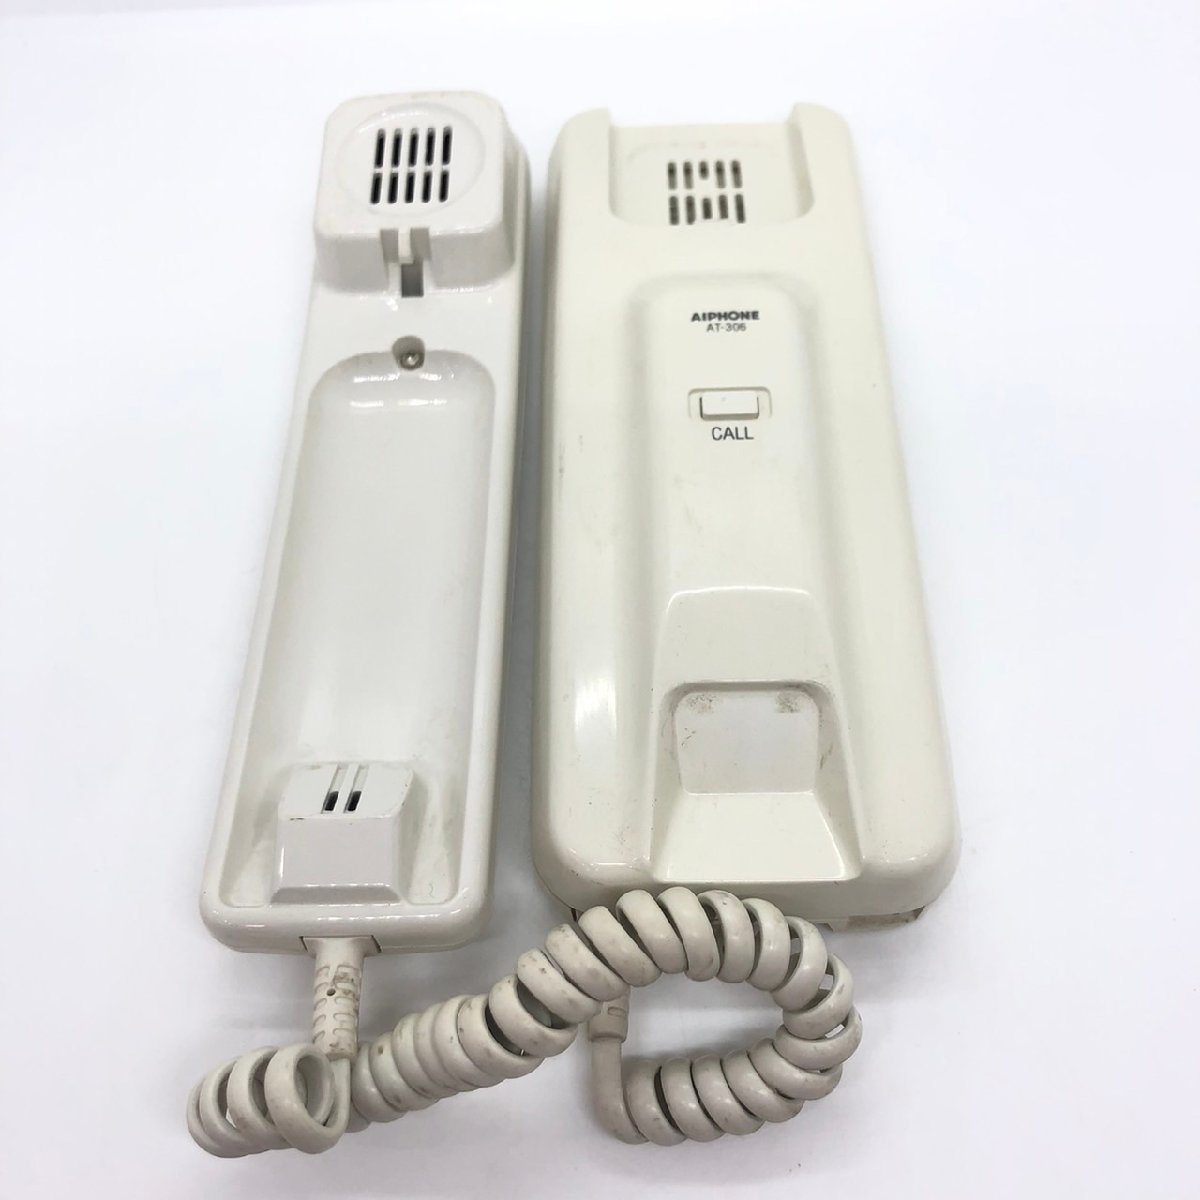 USED アイホン AIP HONE AT-306 インターホン 壁掛型 子機 ホワイト 白 受話器 2個 セット CALL 呼出 通話 家庭内用 屋内 工事 動作未確認の画像4